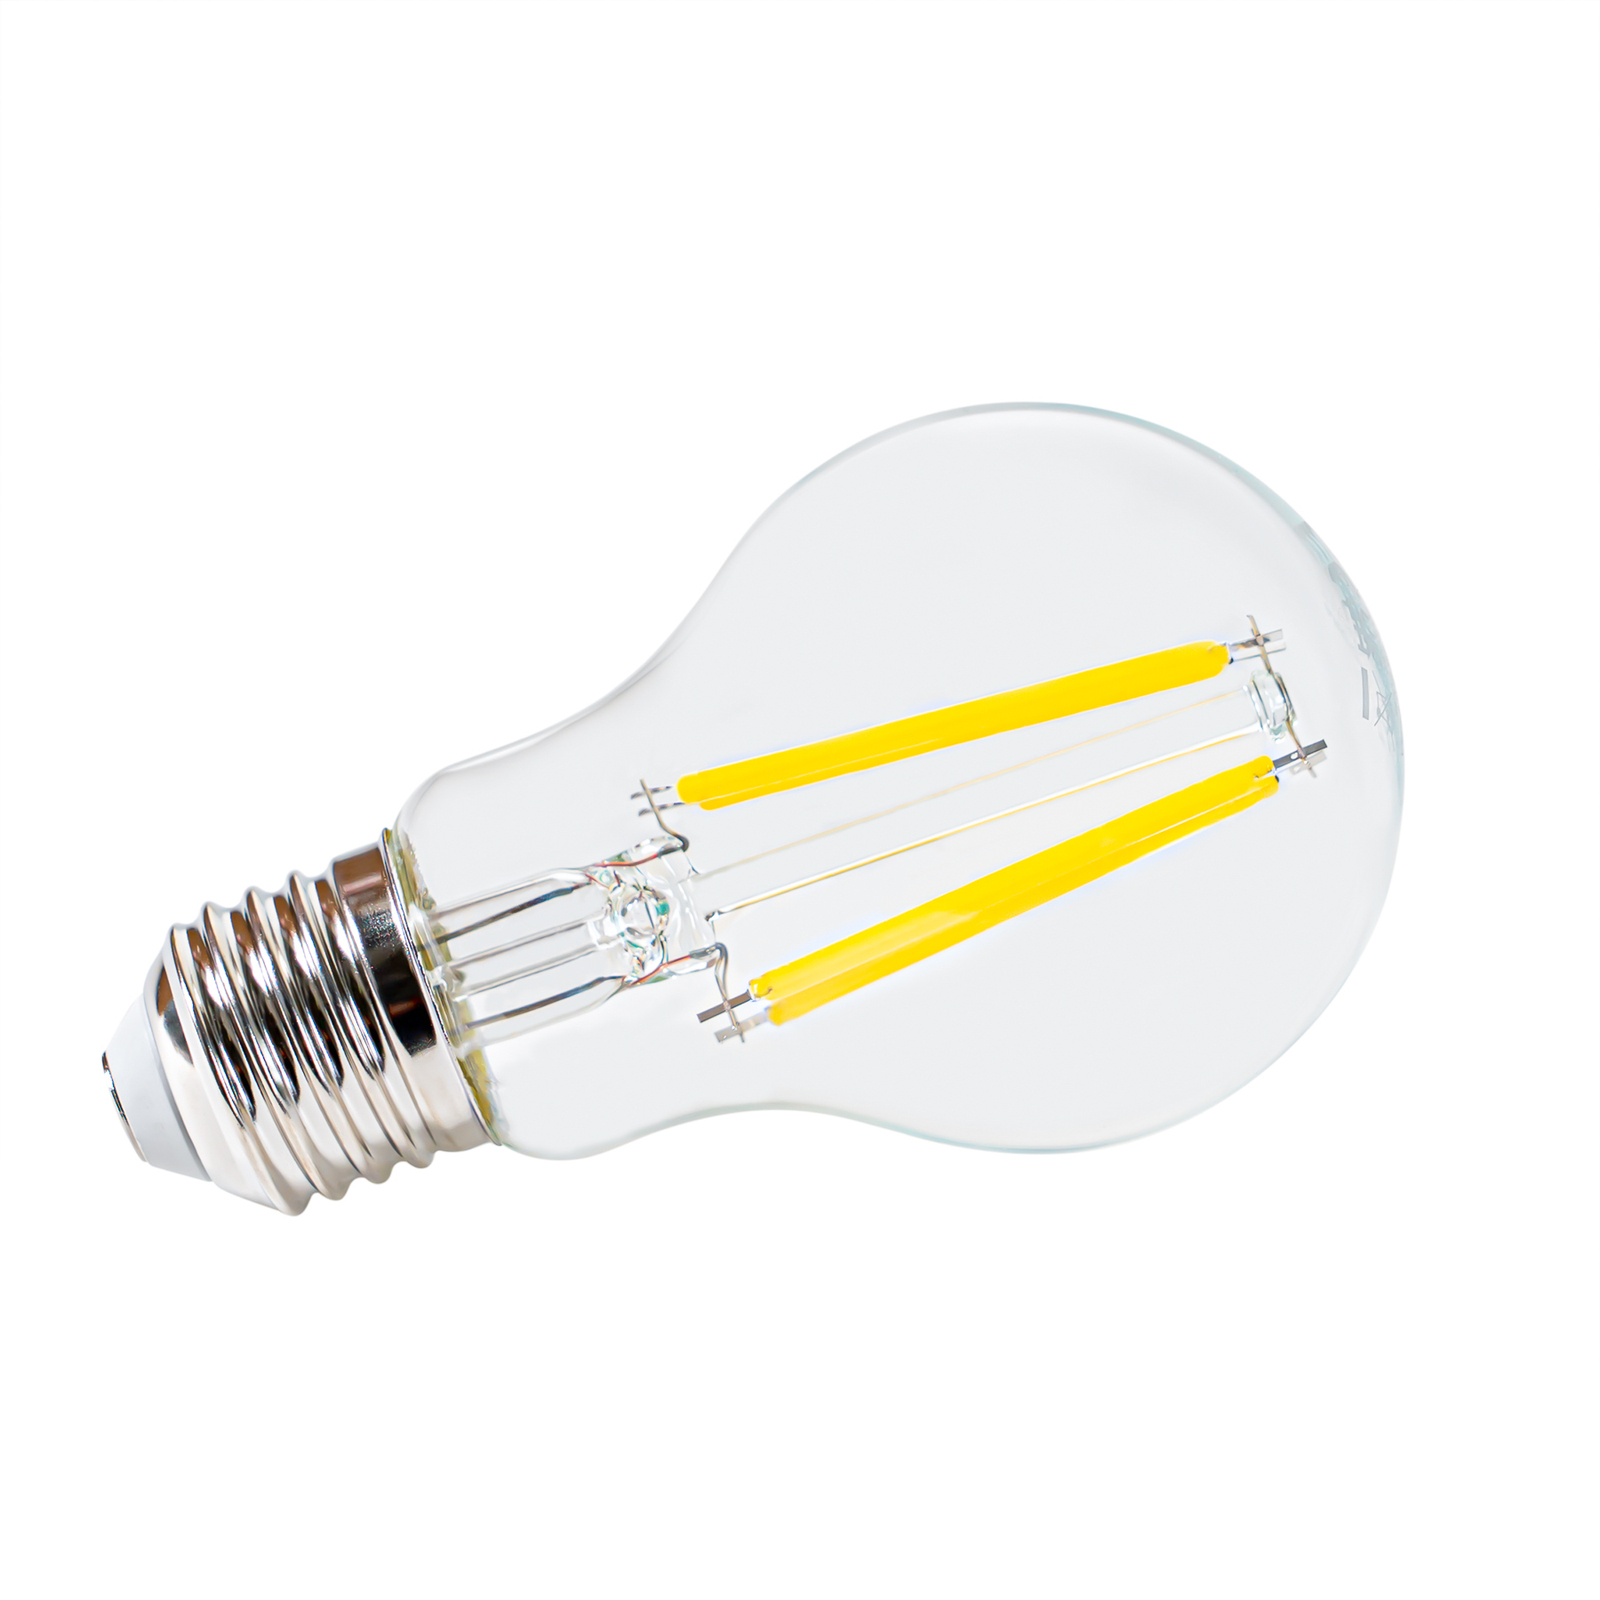 Filament LED bulb E27 5W 3,000K 1060 lumens clear